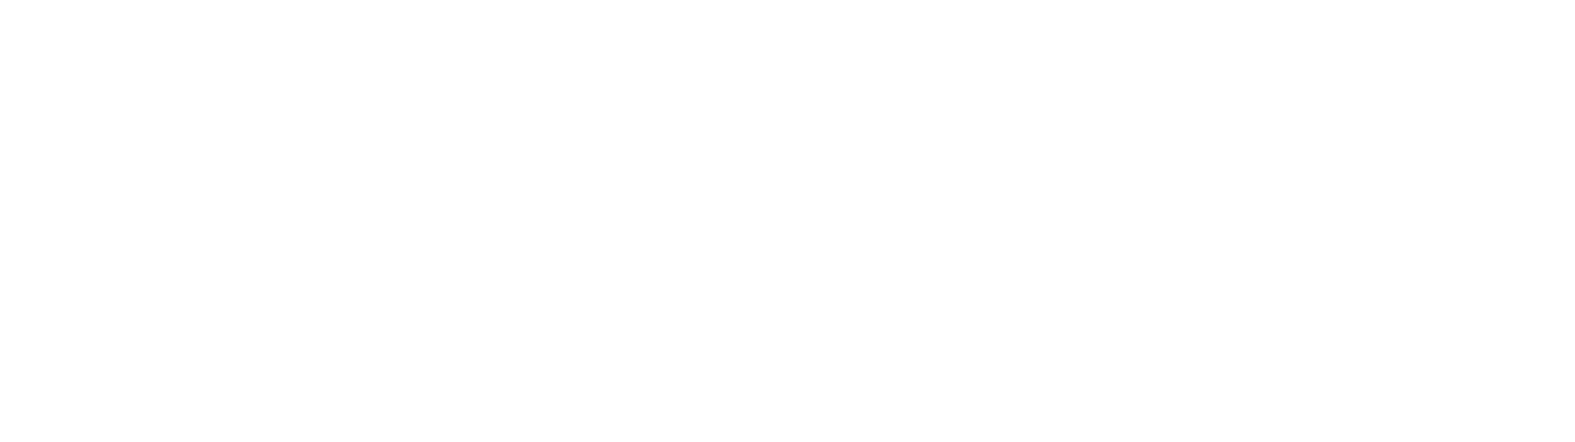 National Bank of Canada
 Logo groß für dunkle Hintergründe (transparentes PNG)